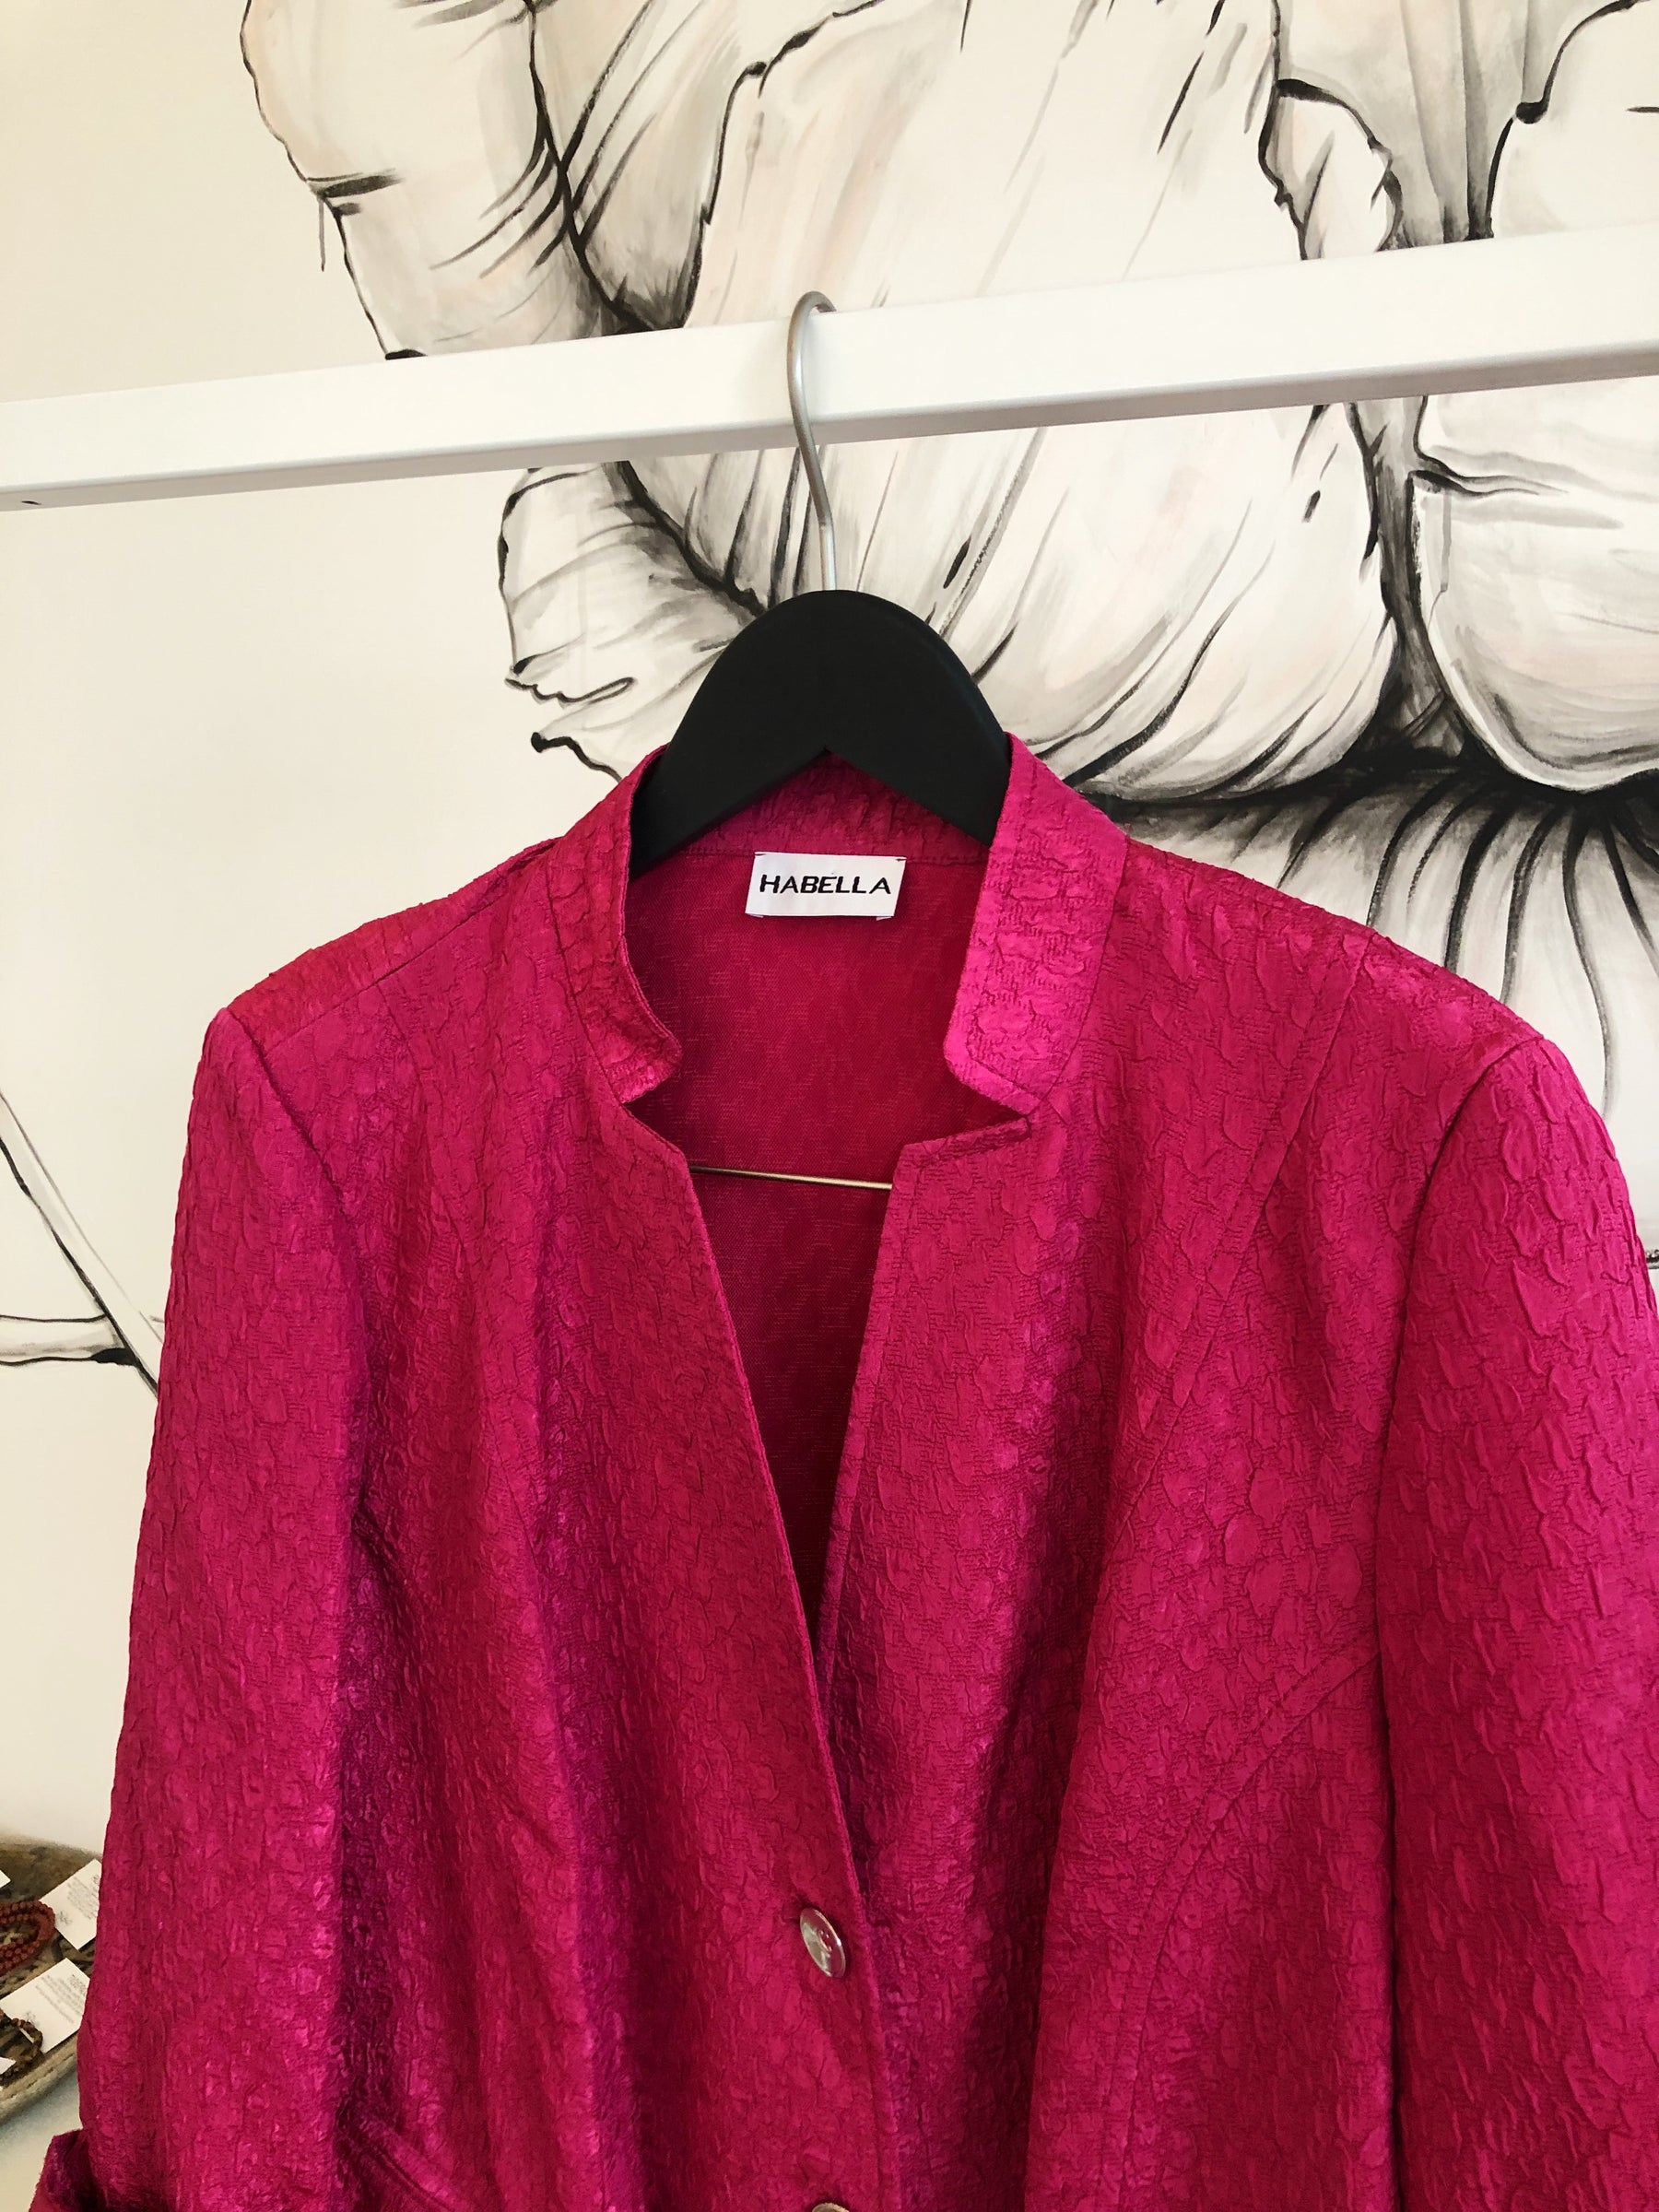 Pink vintage jakke